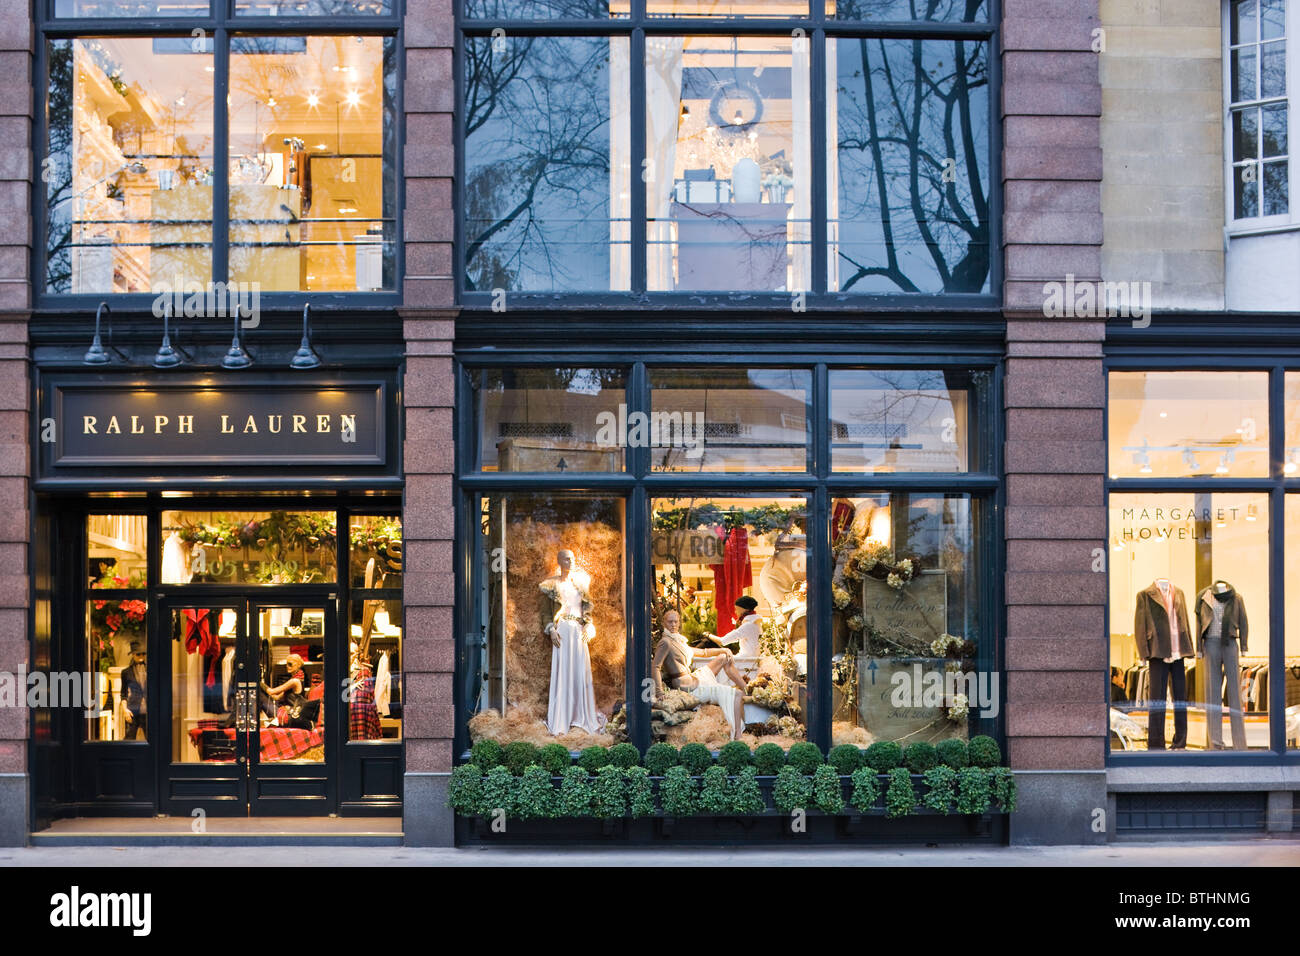 Ralph Lauren Retail Store london Stock Photo - Alamy